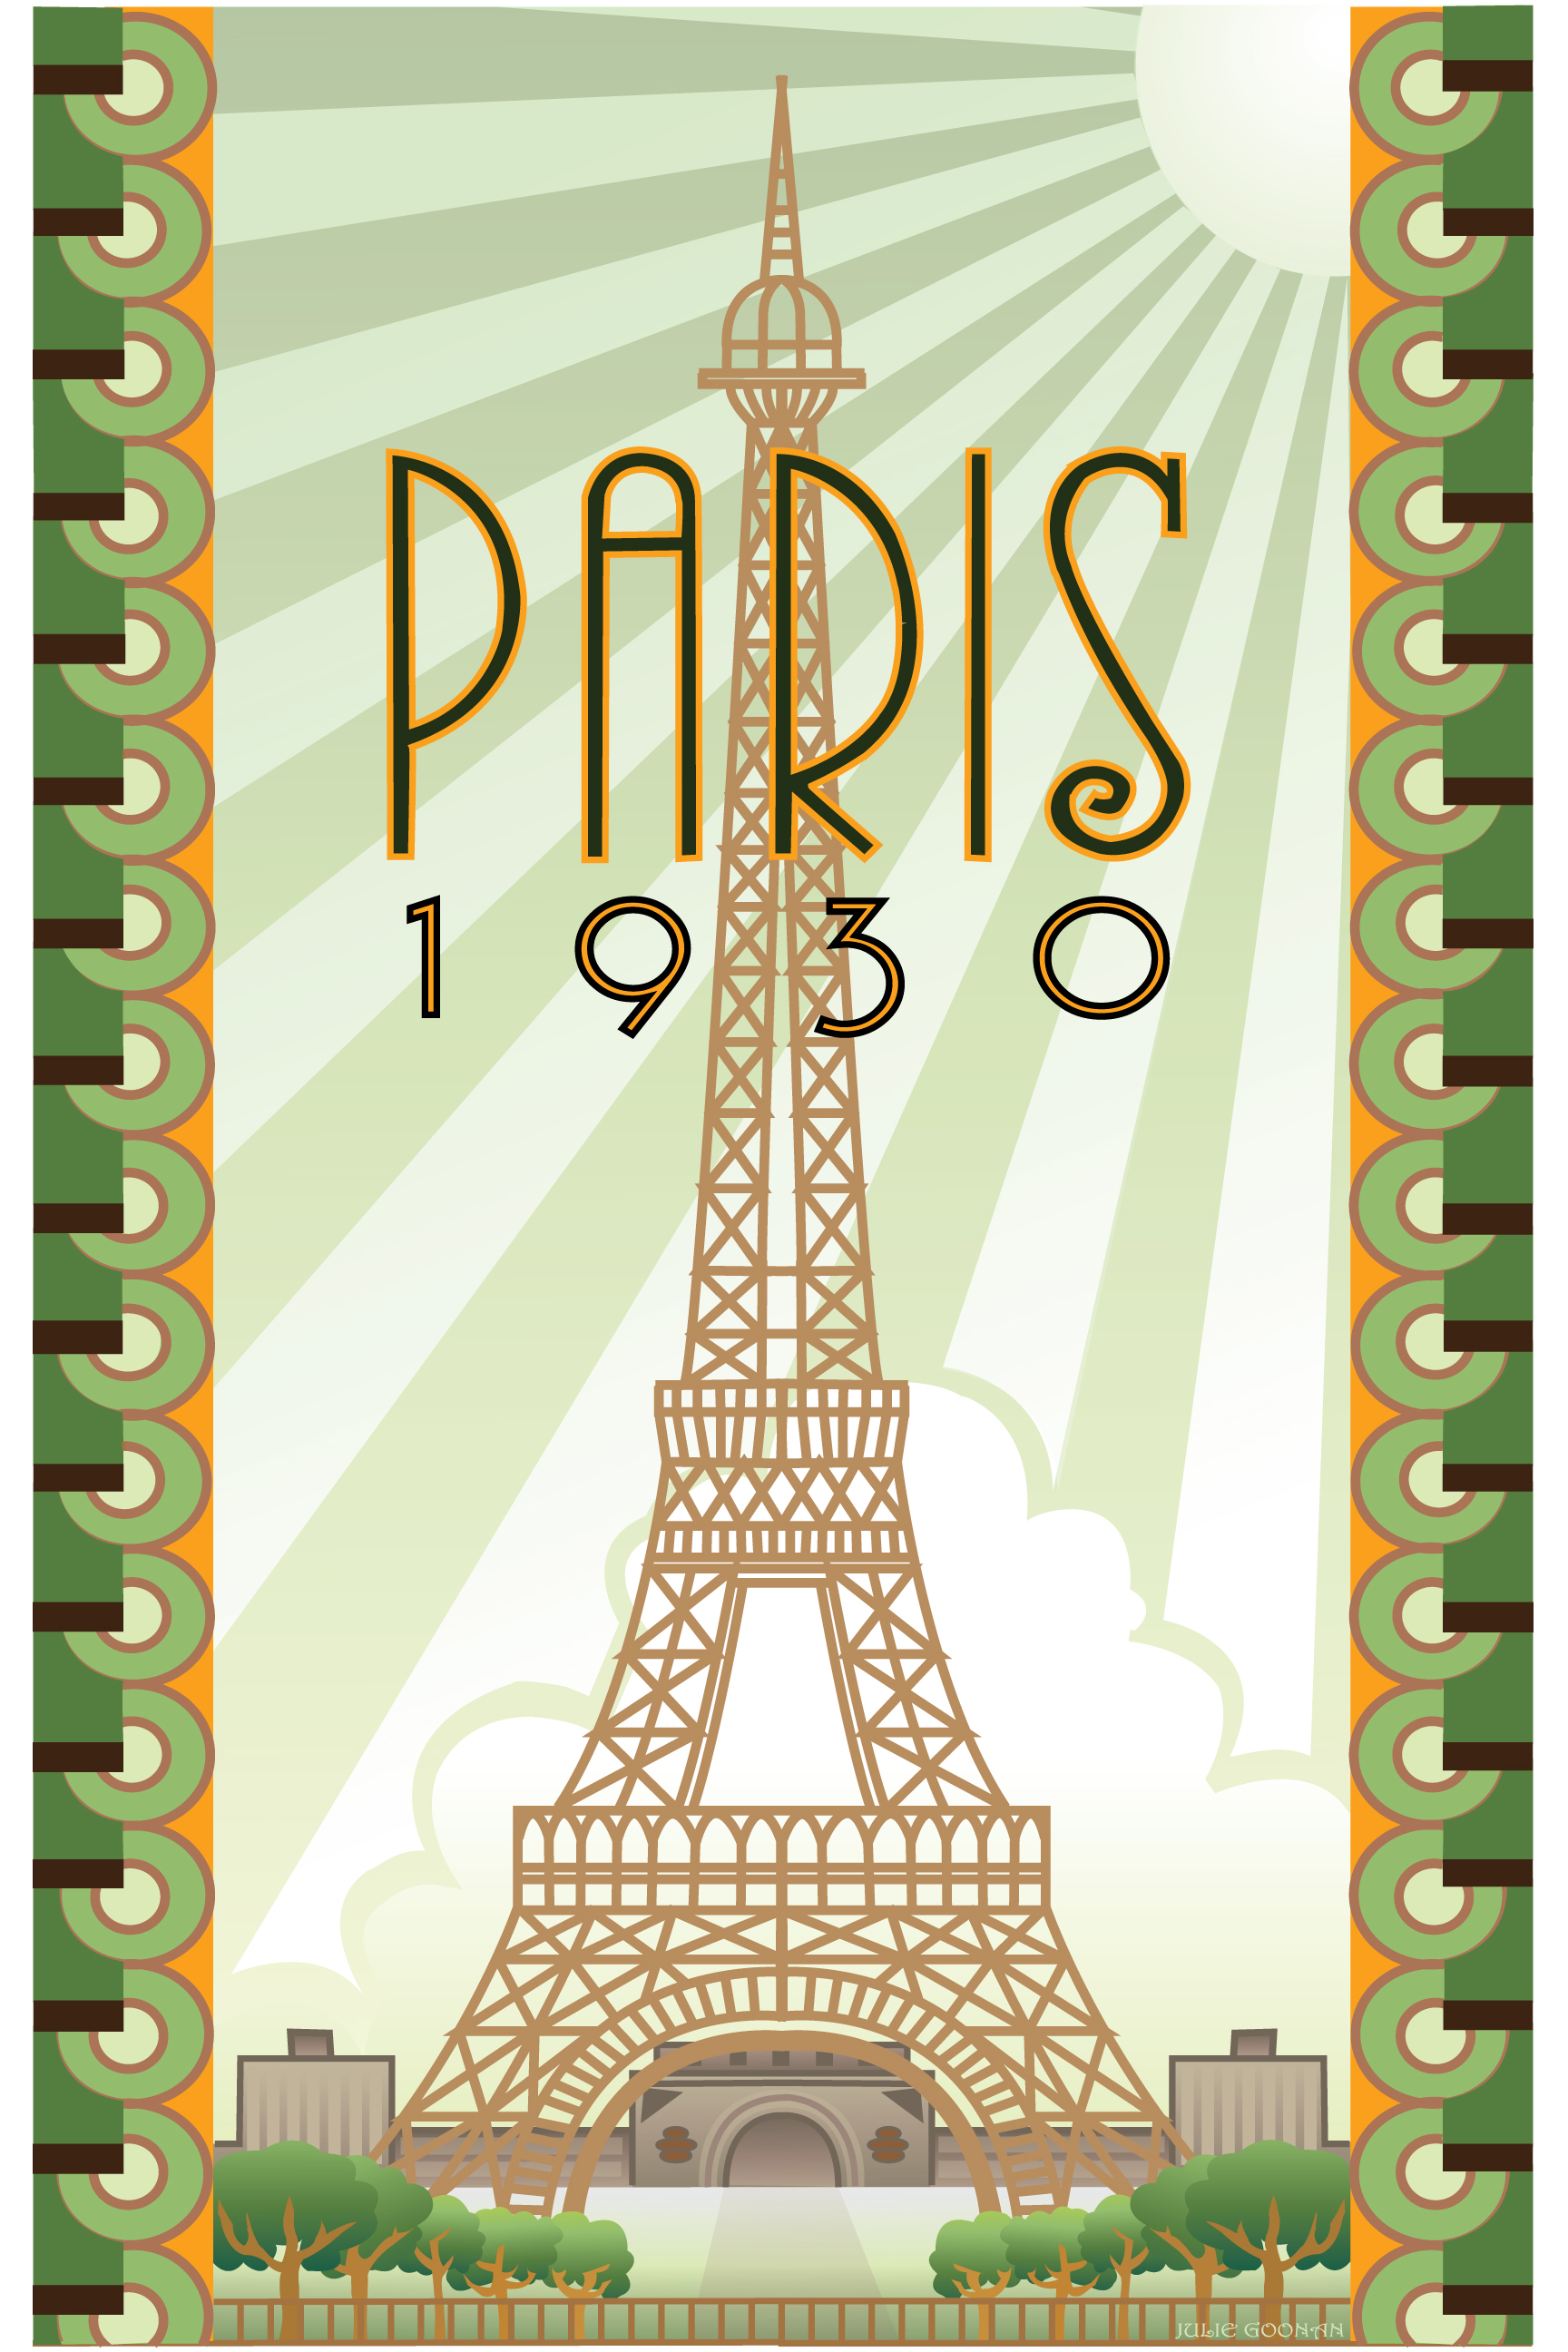 Third Place (tie): “Paris 1930” designed by Julie Goonan of Pleasant Hill, Calif. 